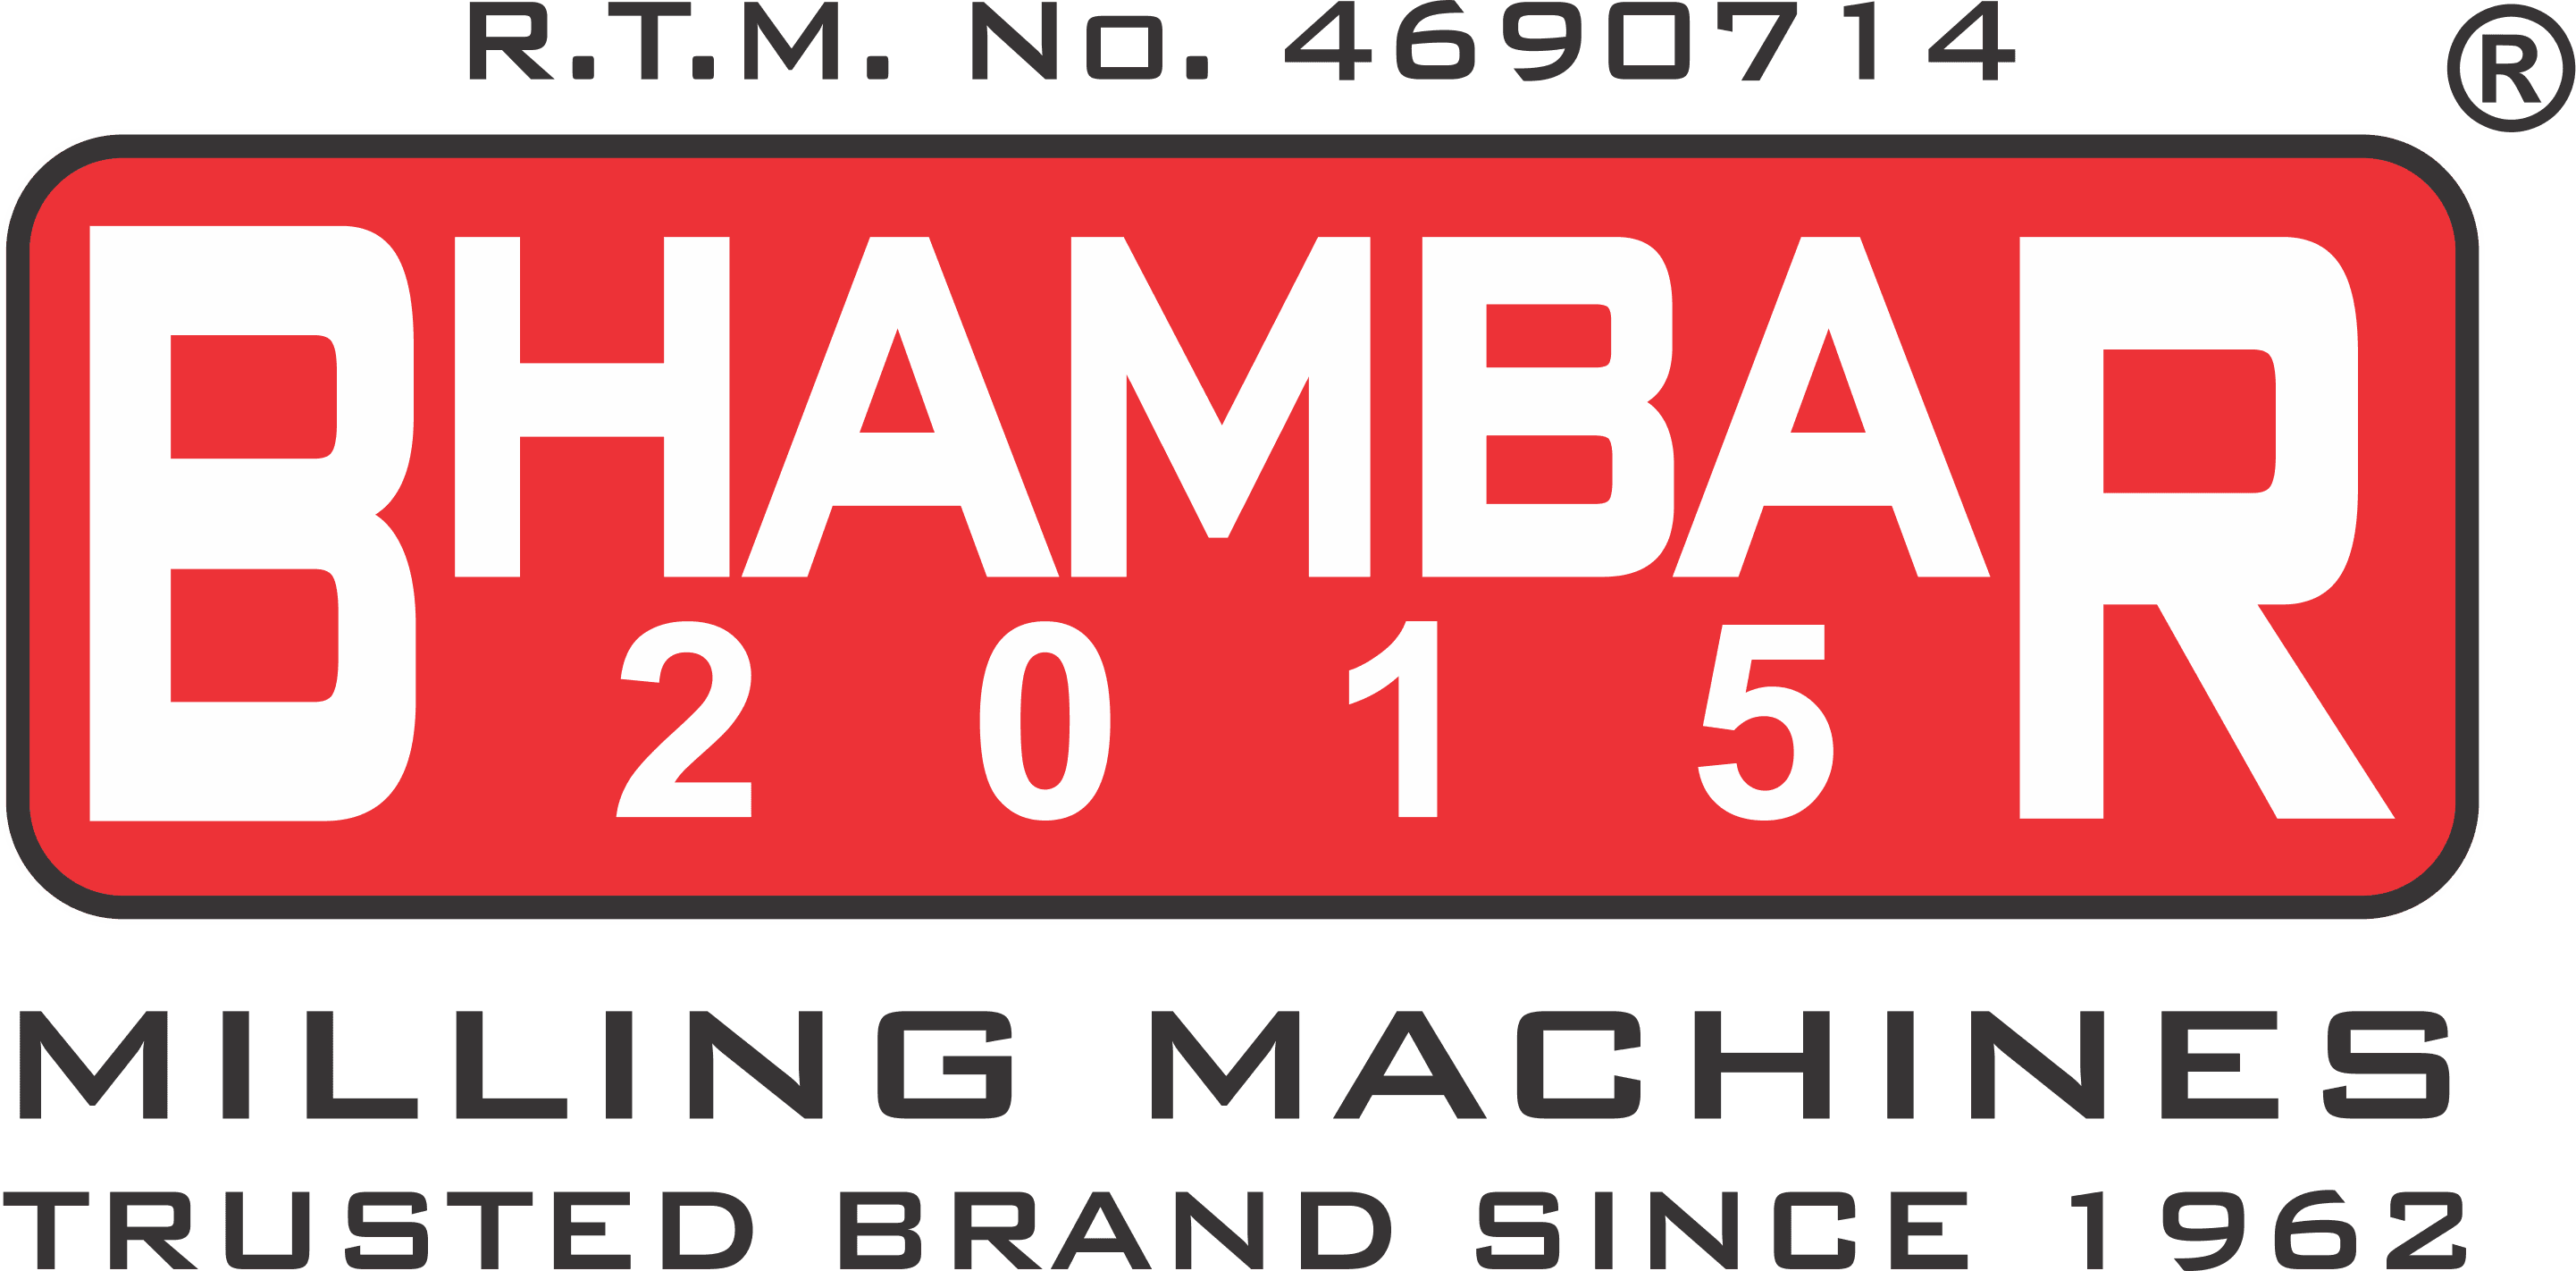 BHAMBAR AUTOMATIONS INC.